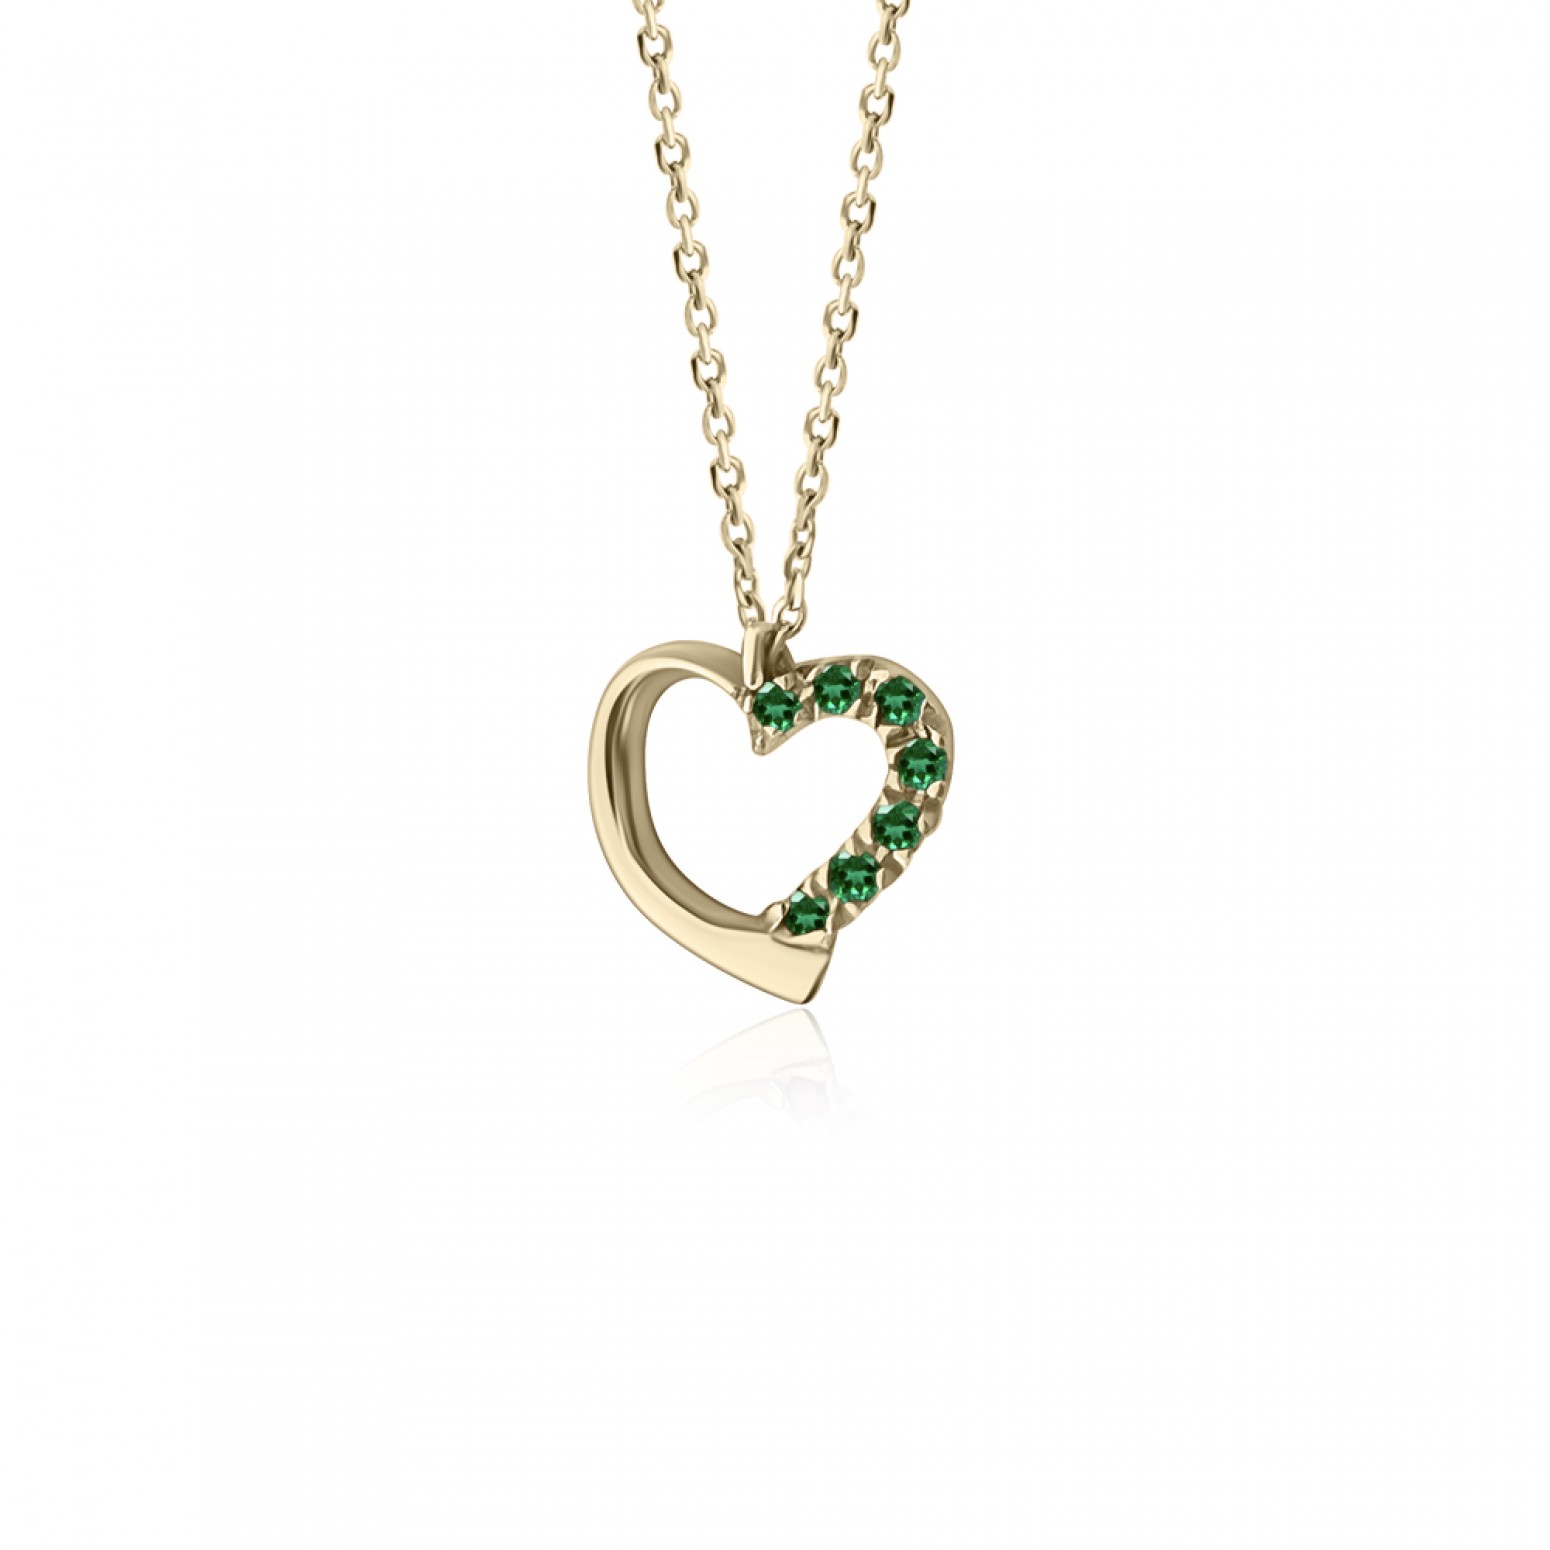 Heart necklace, Κ18 gold with emeralds 0.07ct, ko5633 NECKLACES Κοσμηματα - chrilia.gr